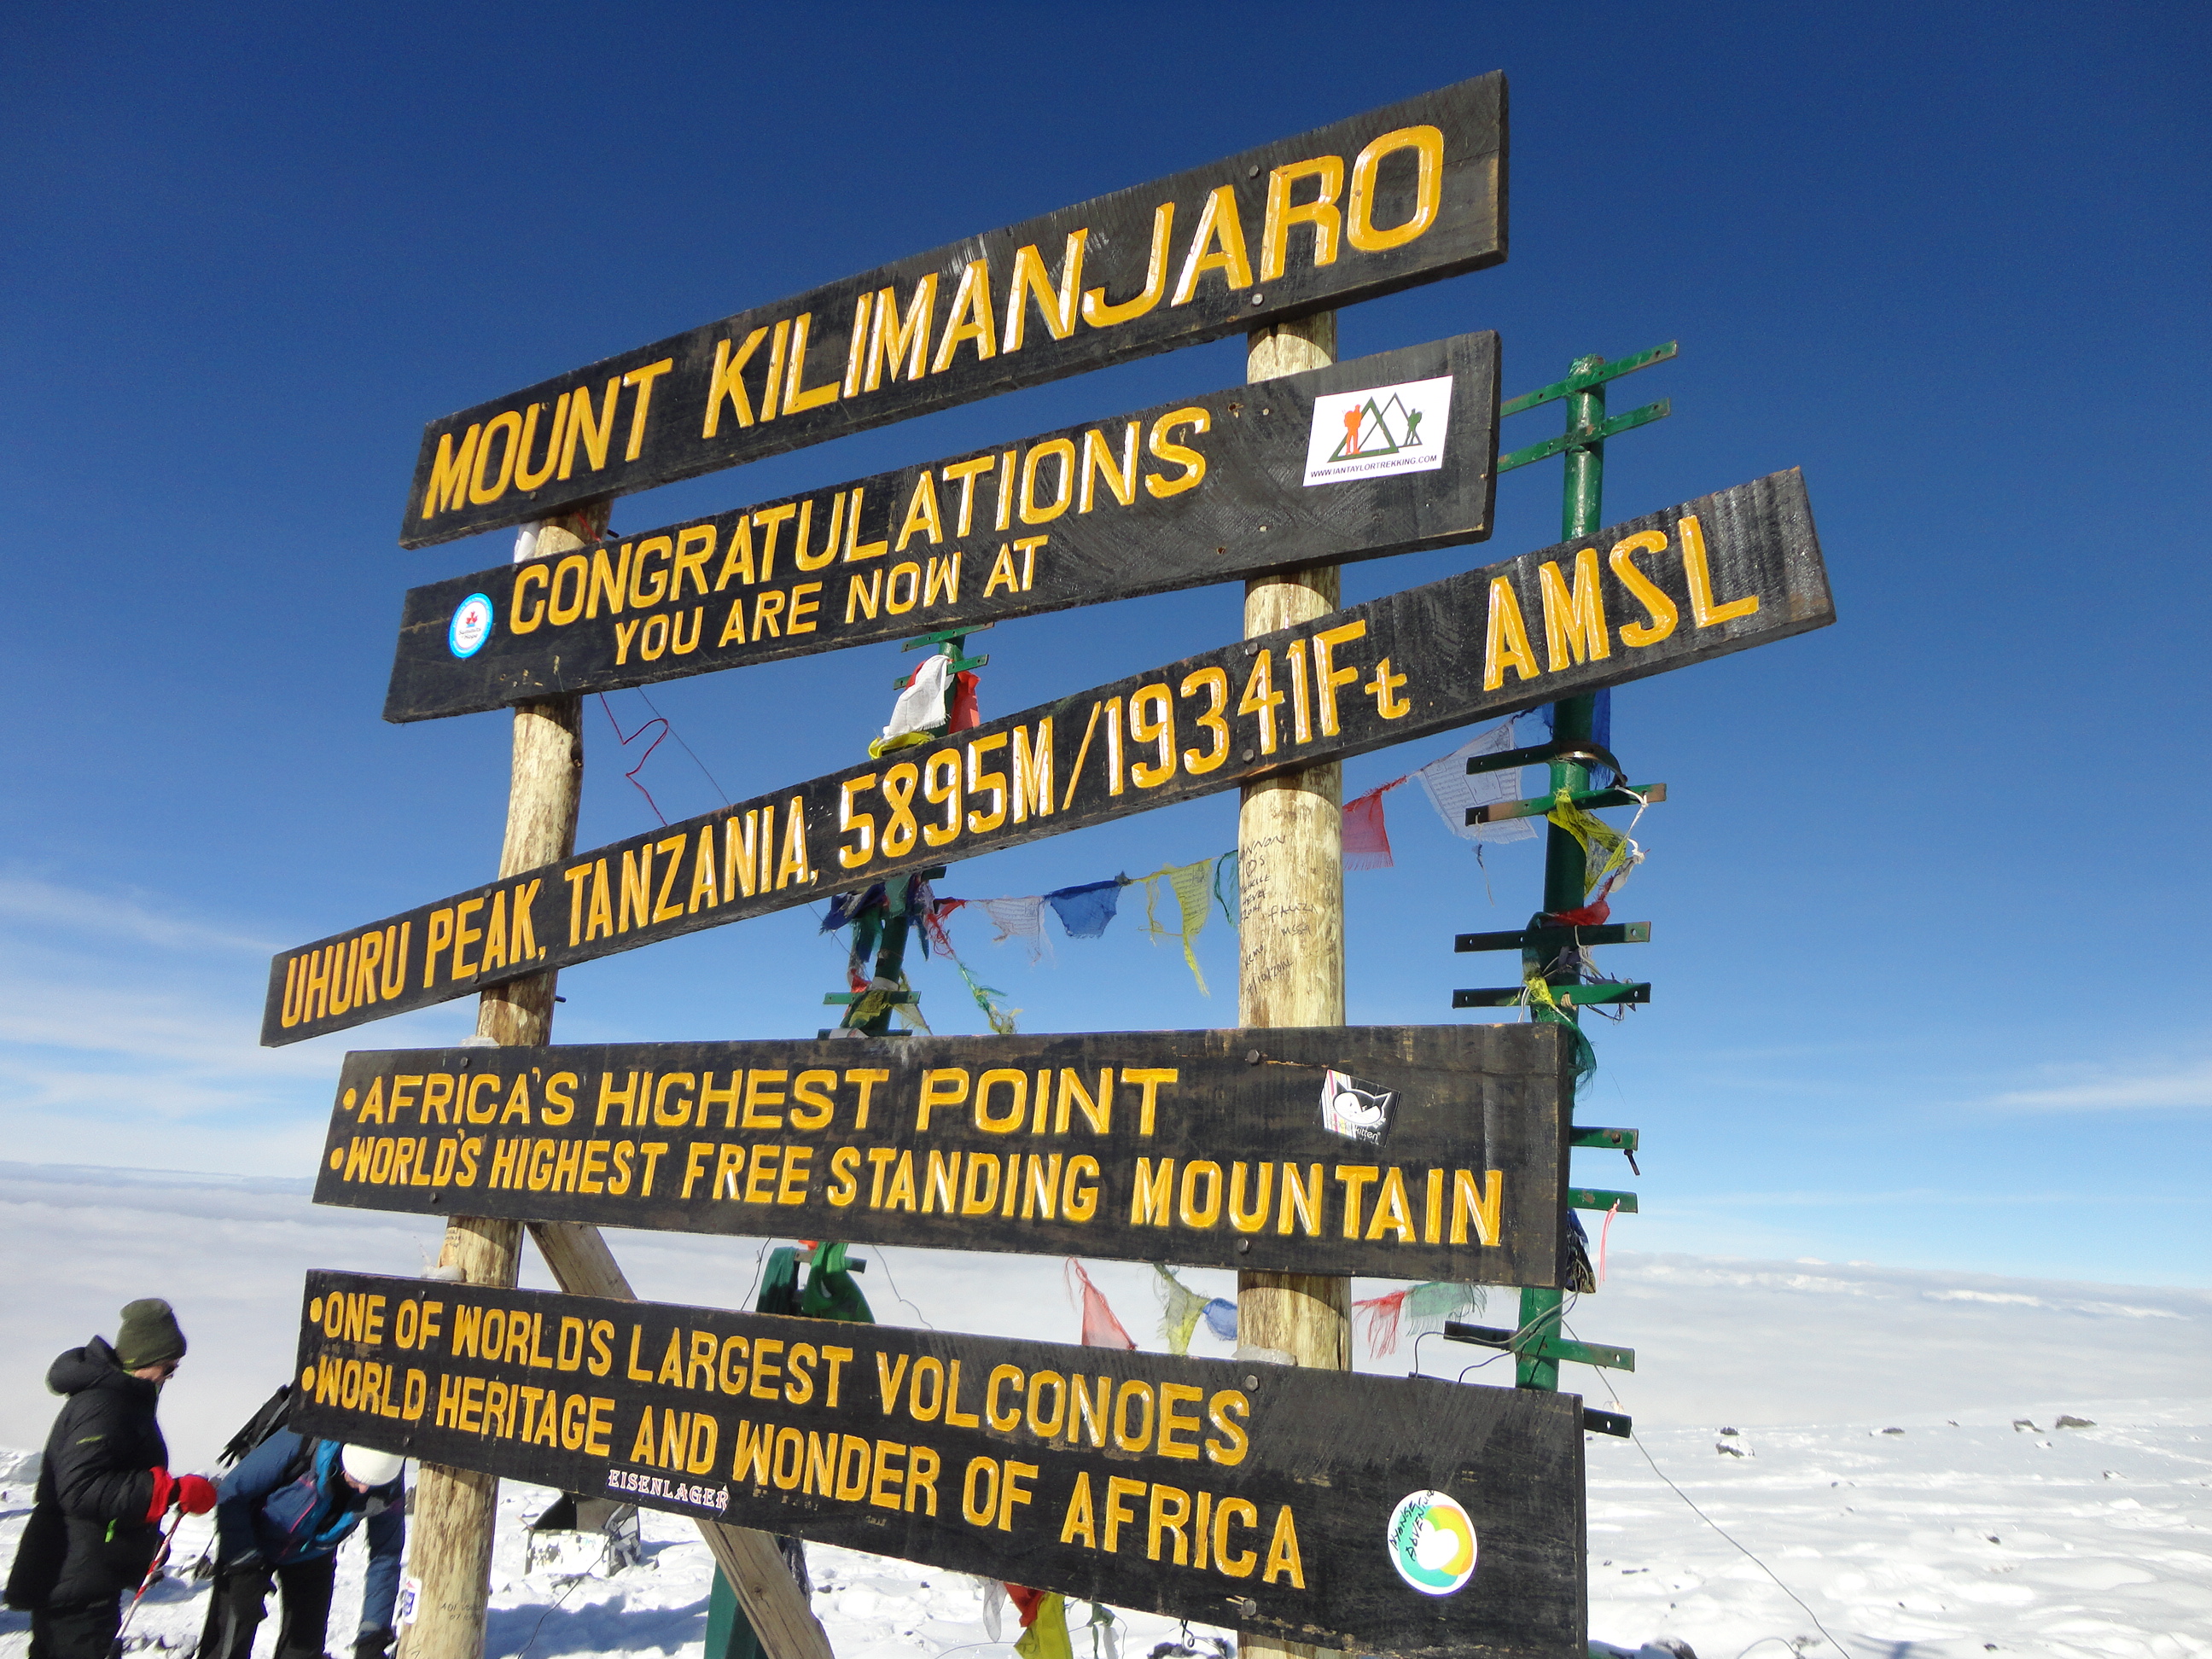 On the top of Kilimanjaro